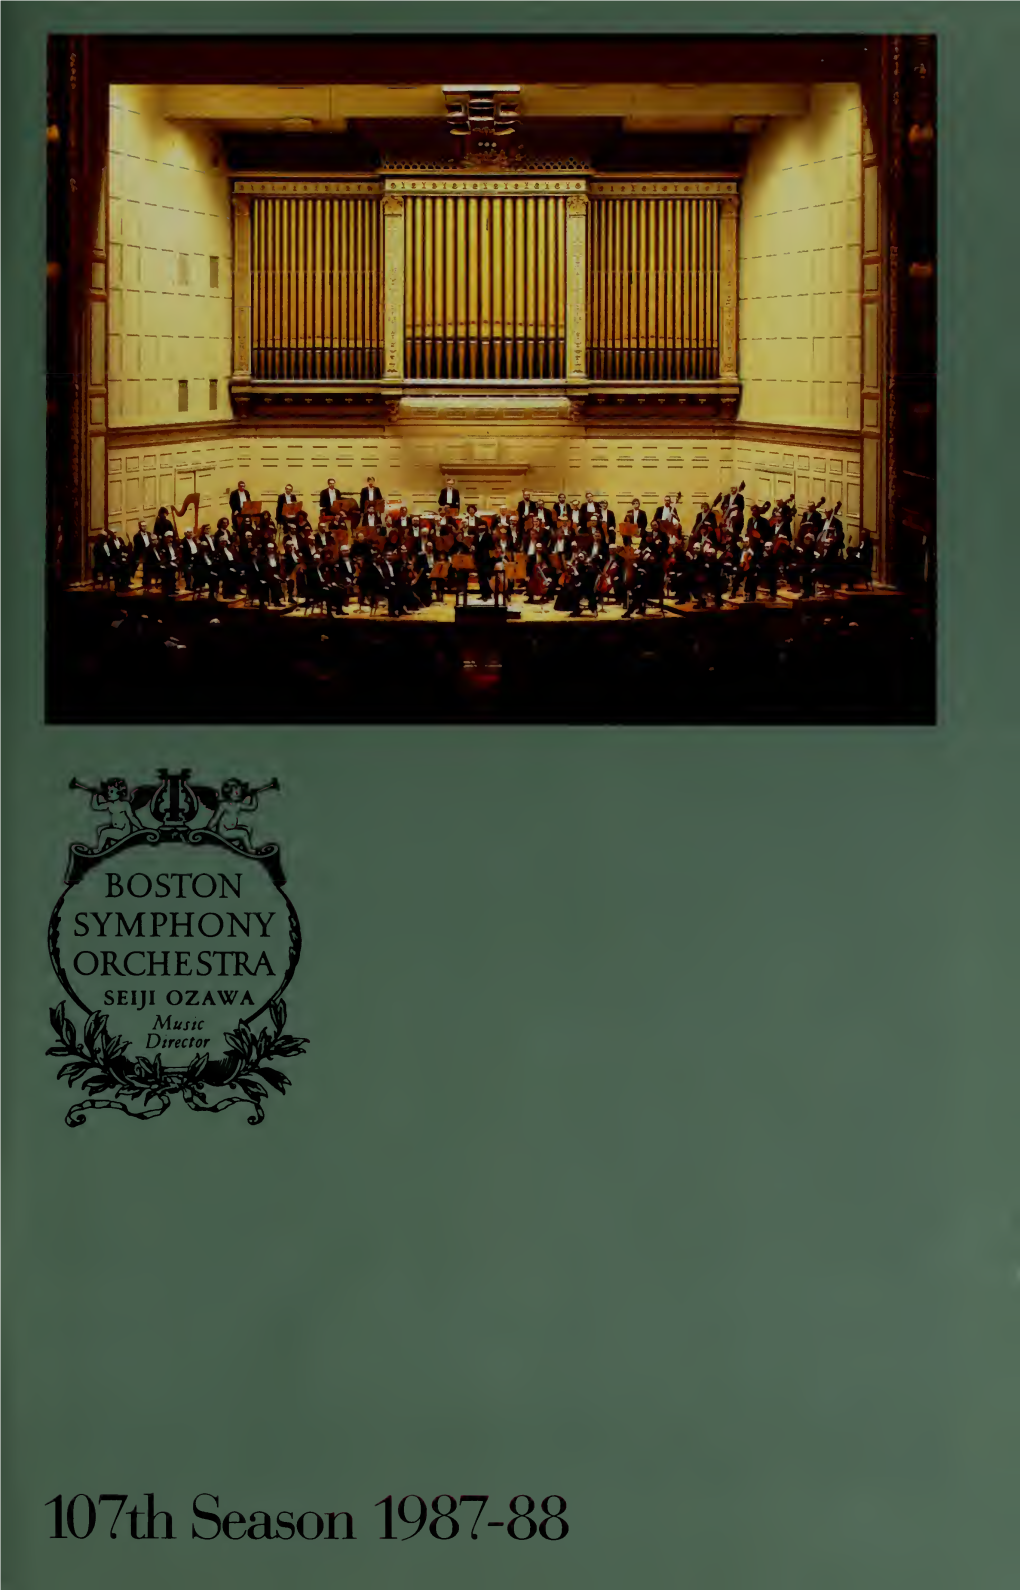 Boston Symphony Orchestra Concert Programs, Season 107, 1987